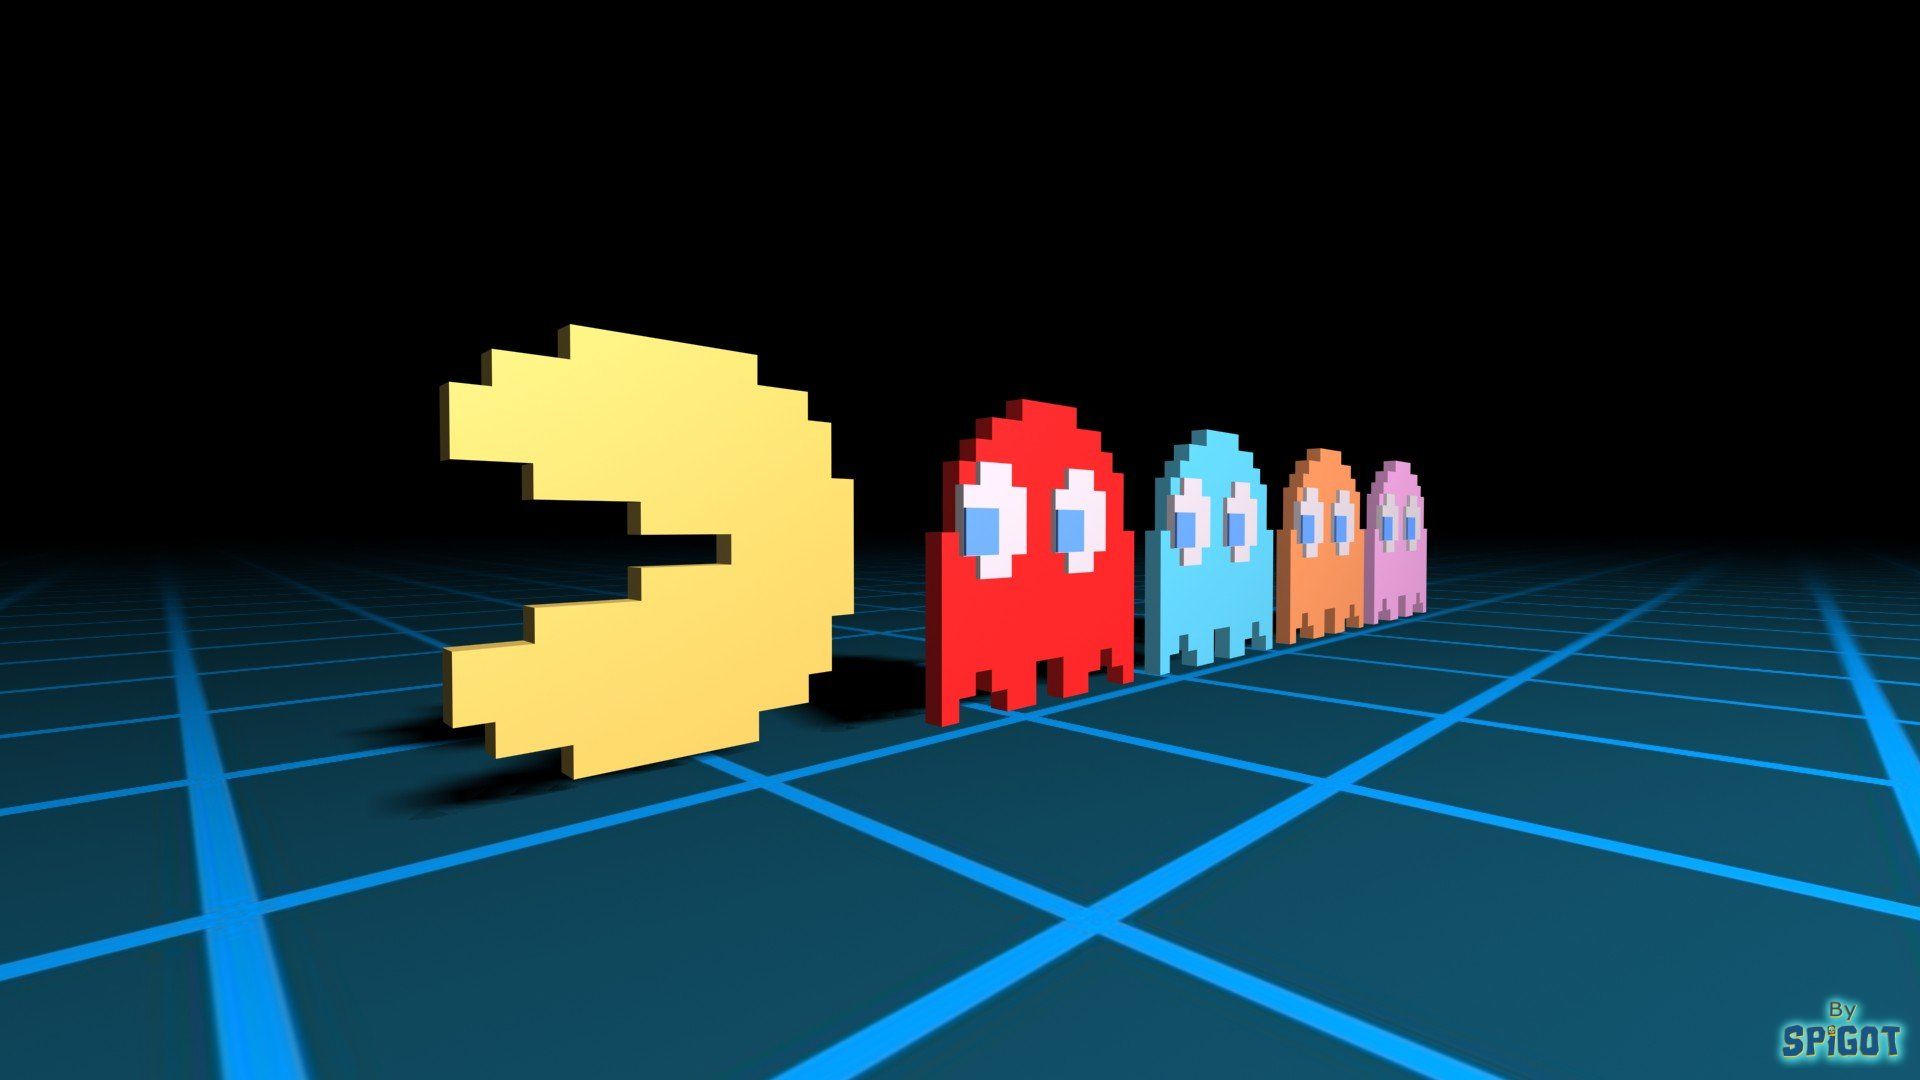 Classic Pacman Wallpaper | George Spigot's Blog